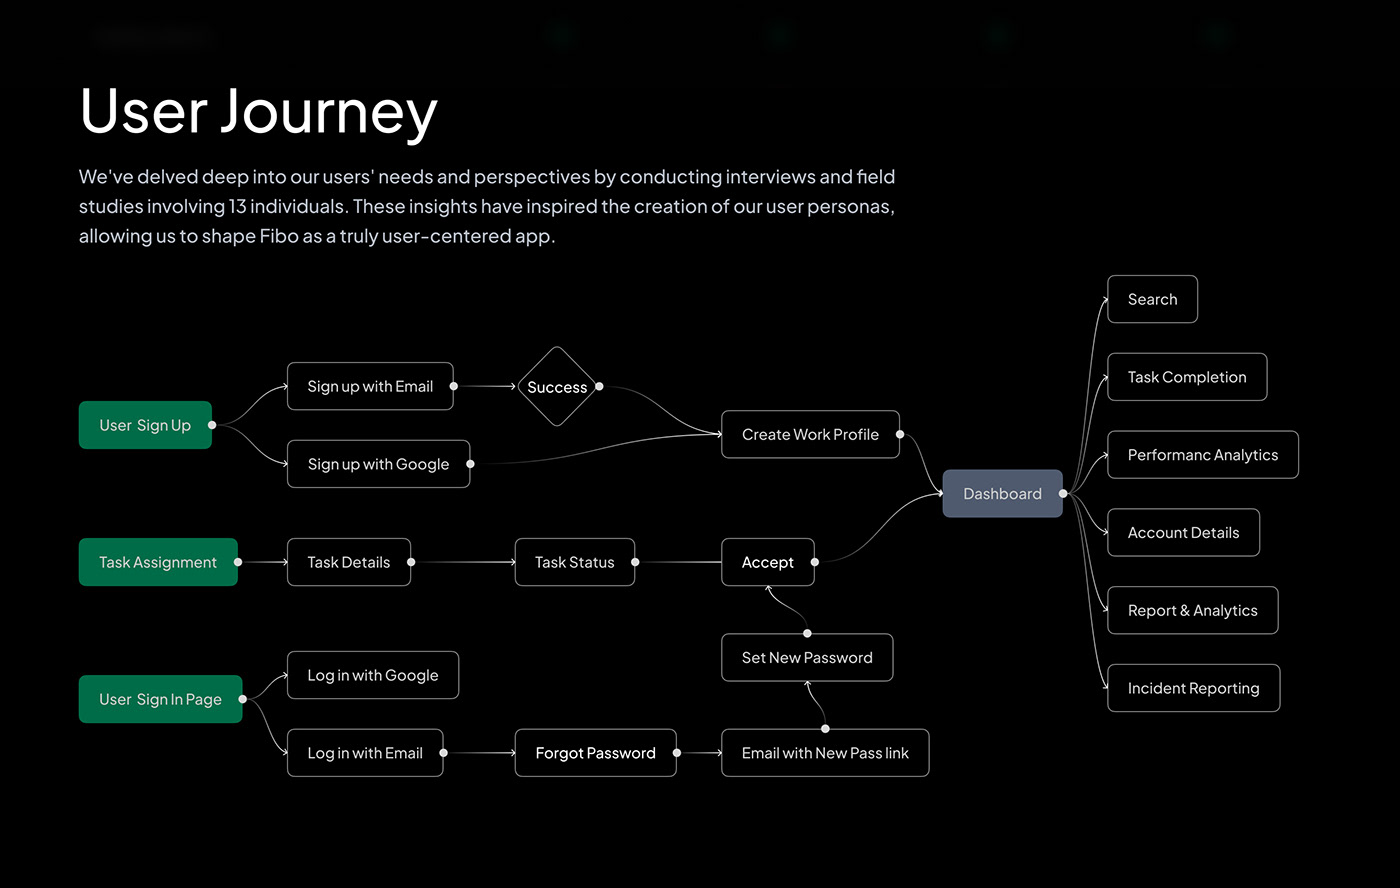 Fleet management user journey map depicts distinct user tasks, clarifying the path toward goal